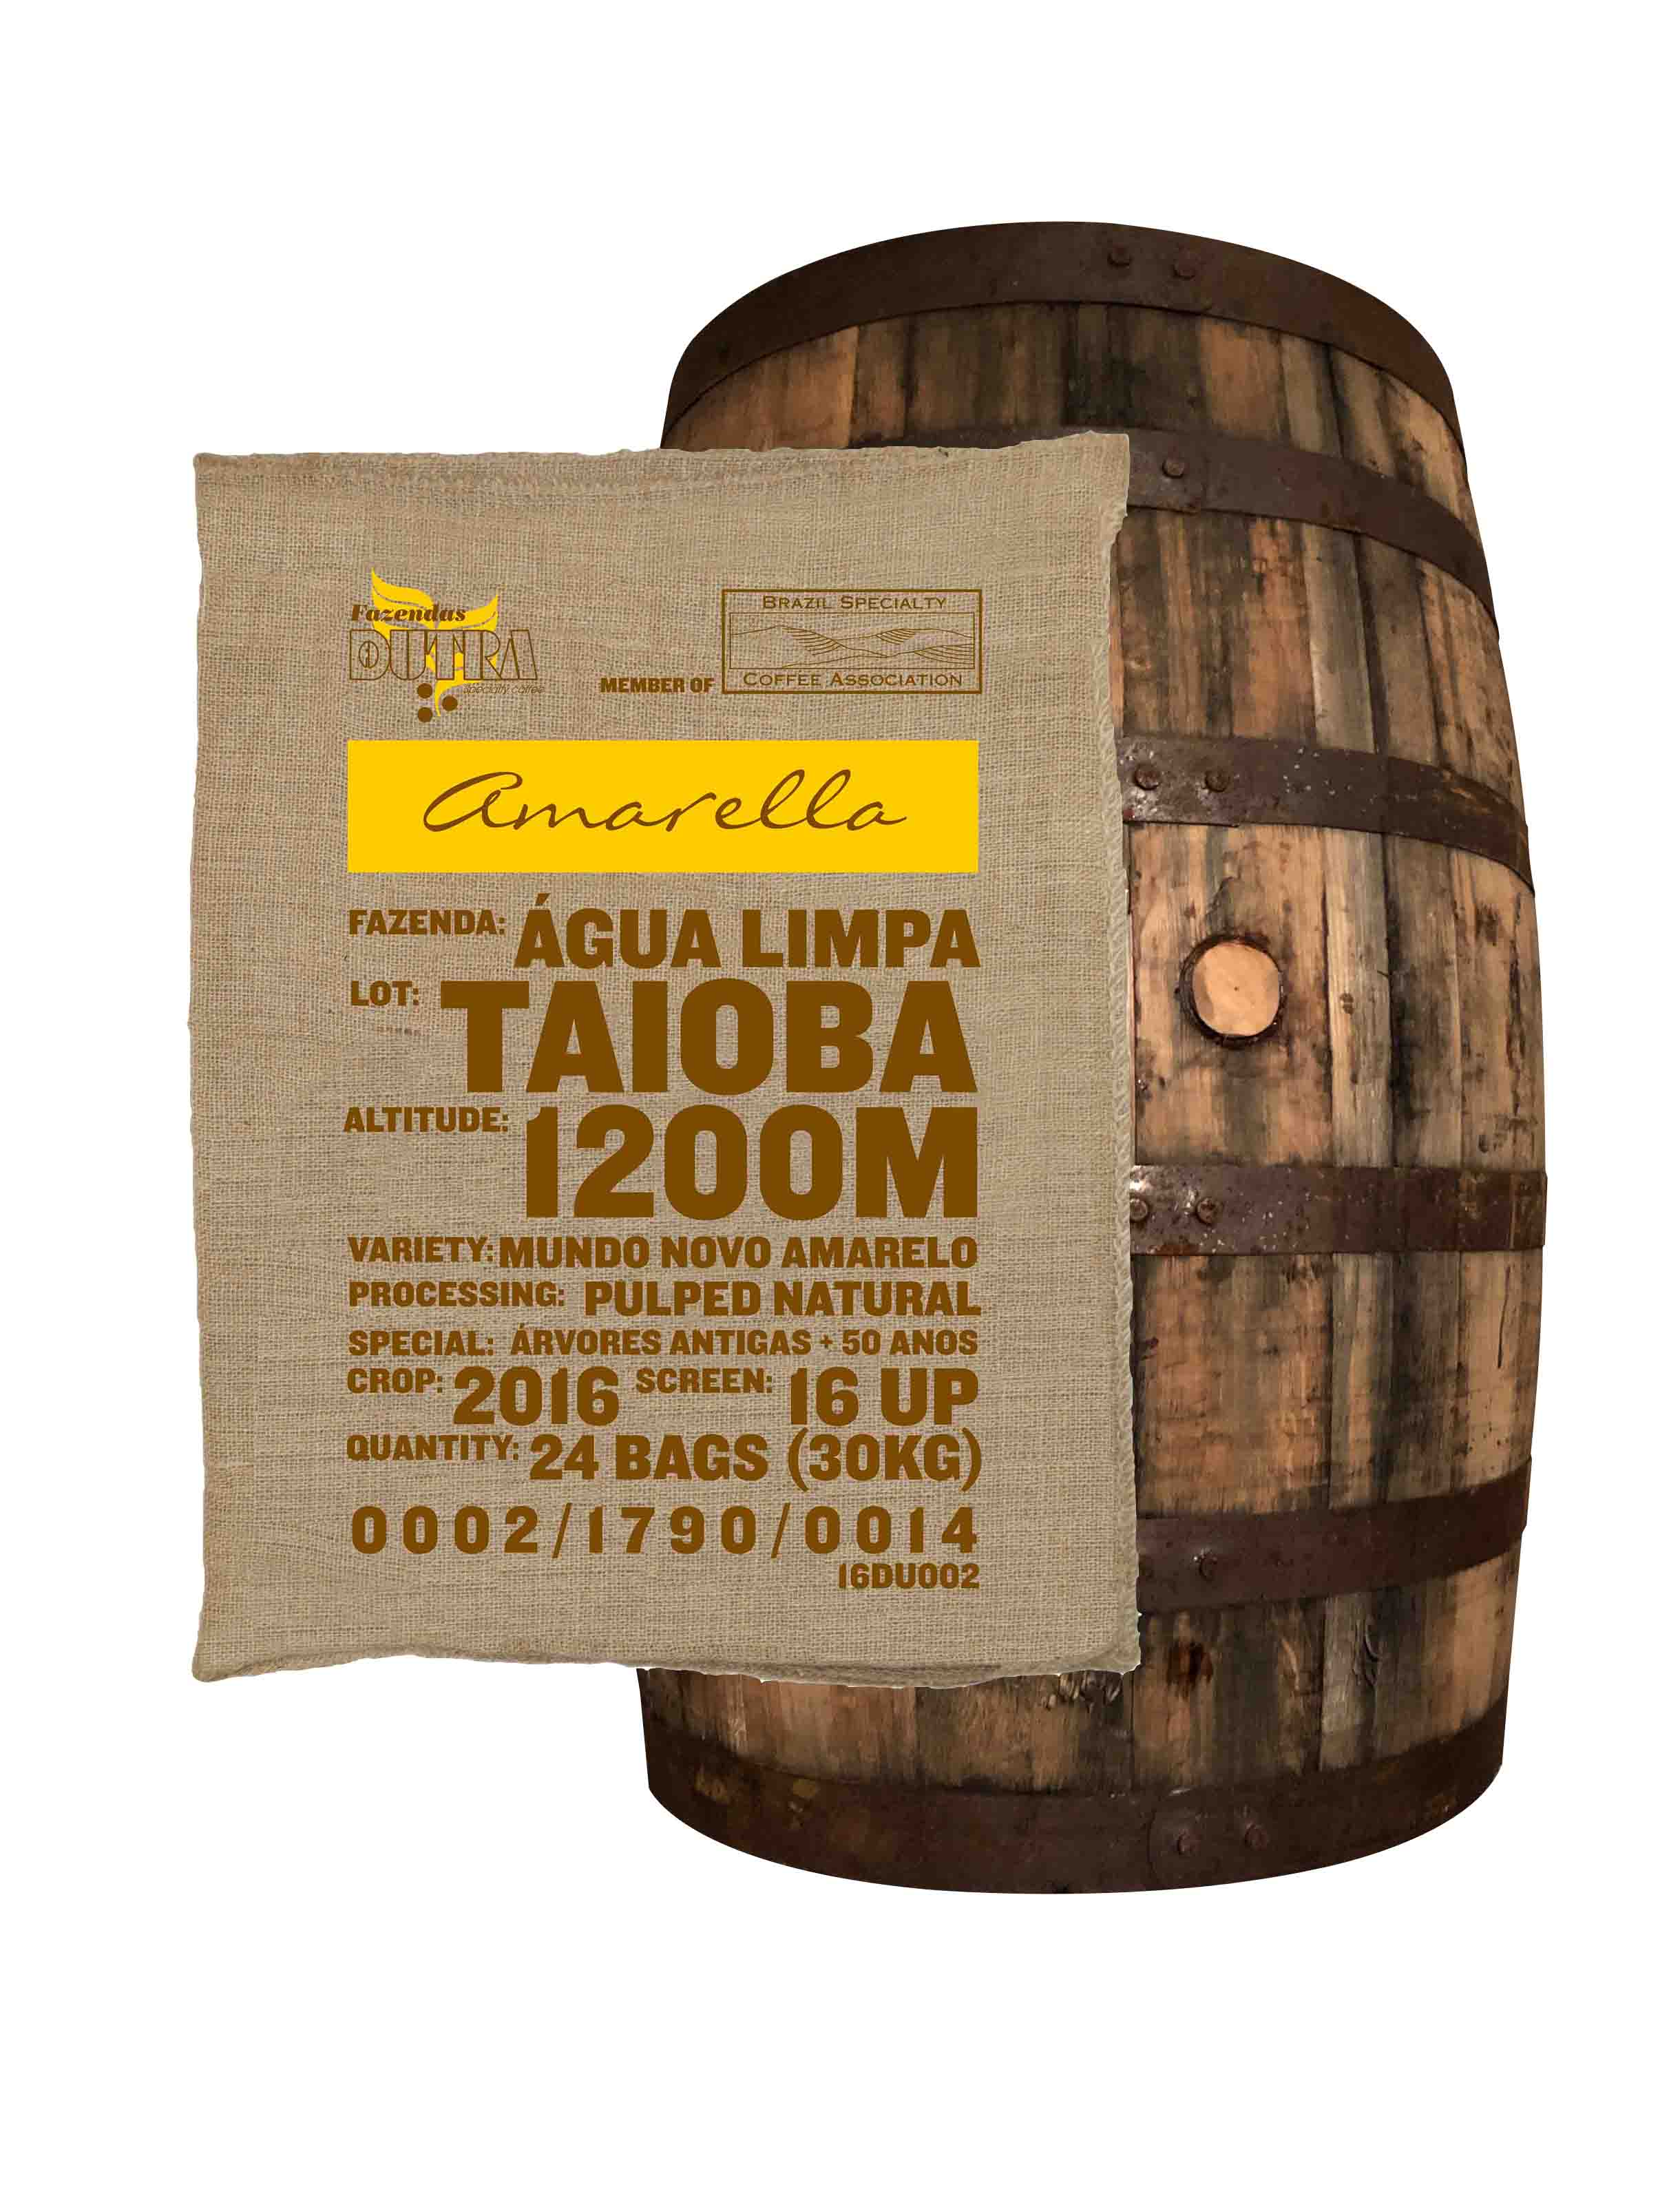 Taioba, Mundo Novo amarelo, barrel-matured "Espirito de Minas Cachaca" 